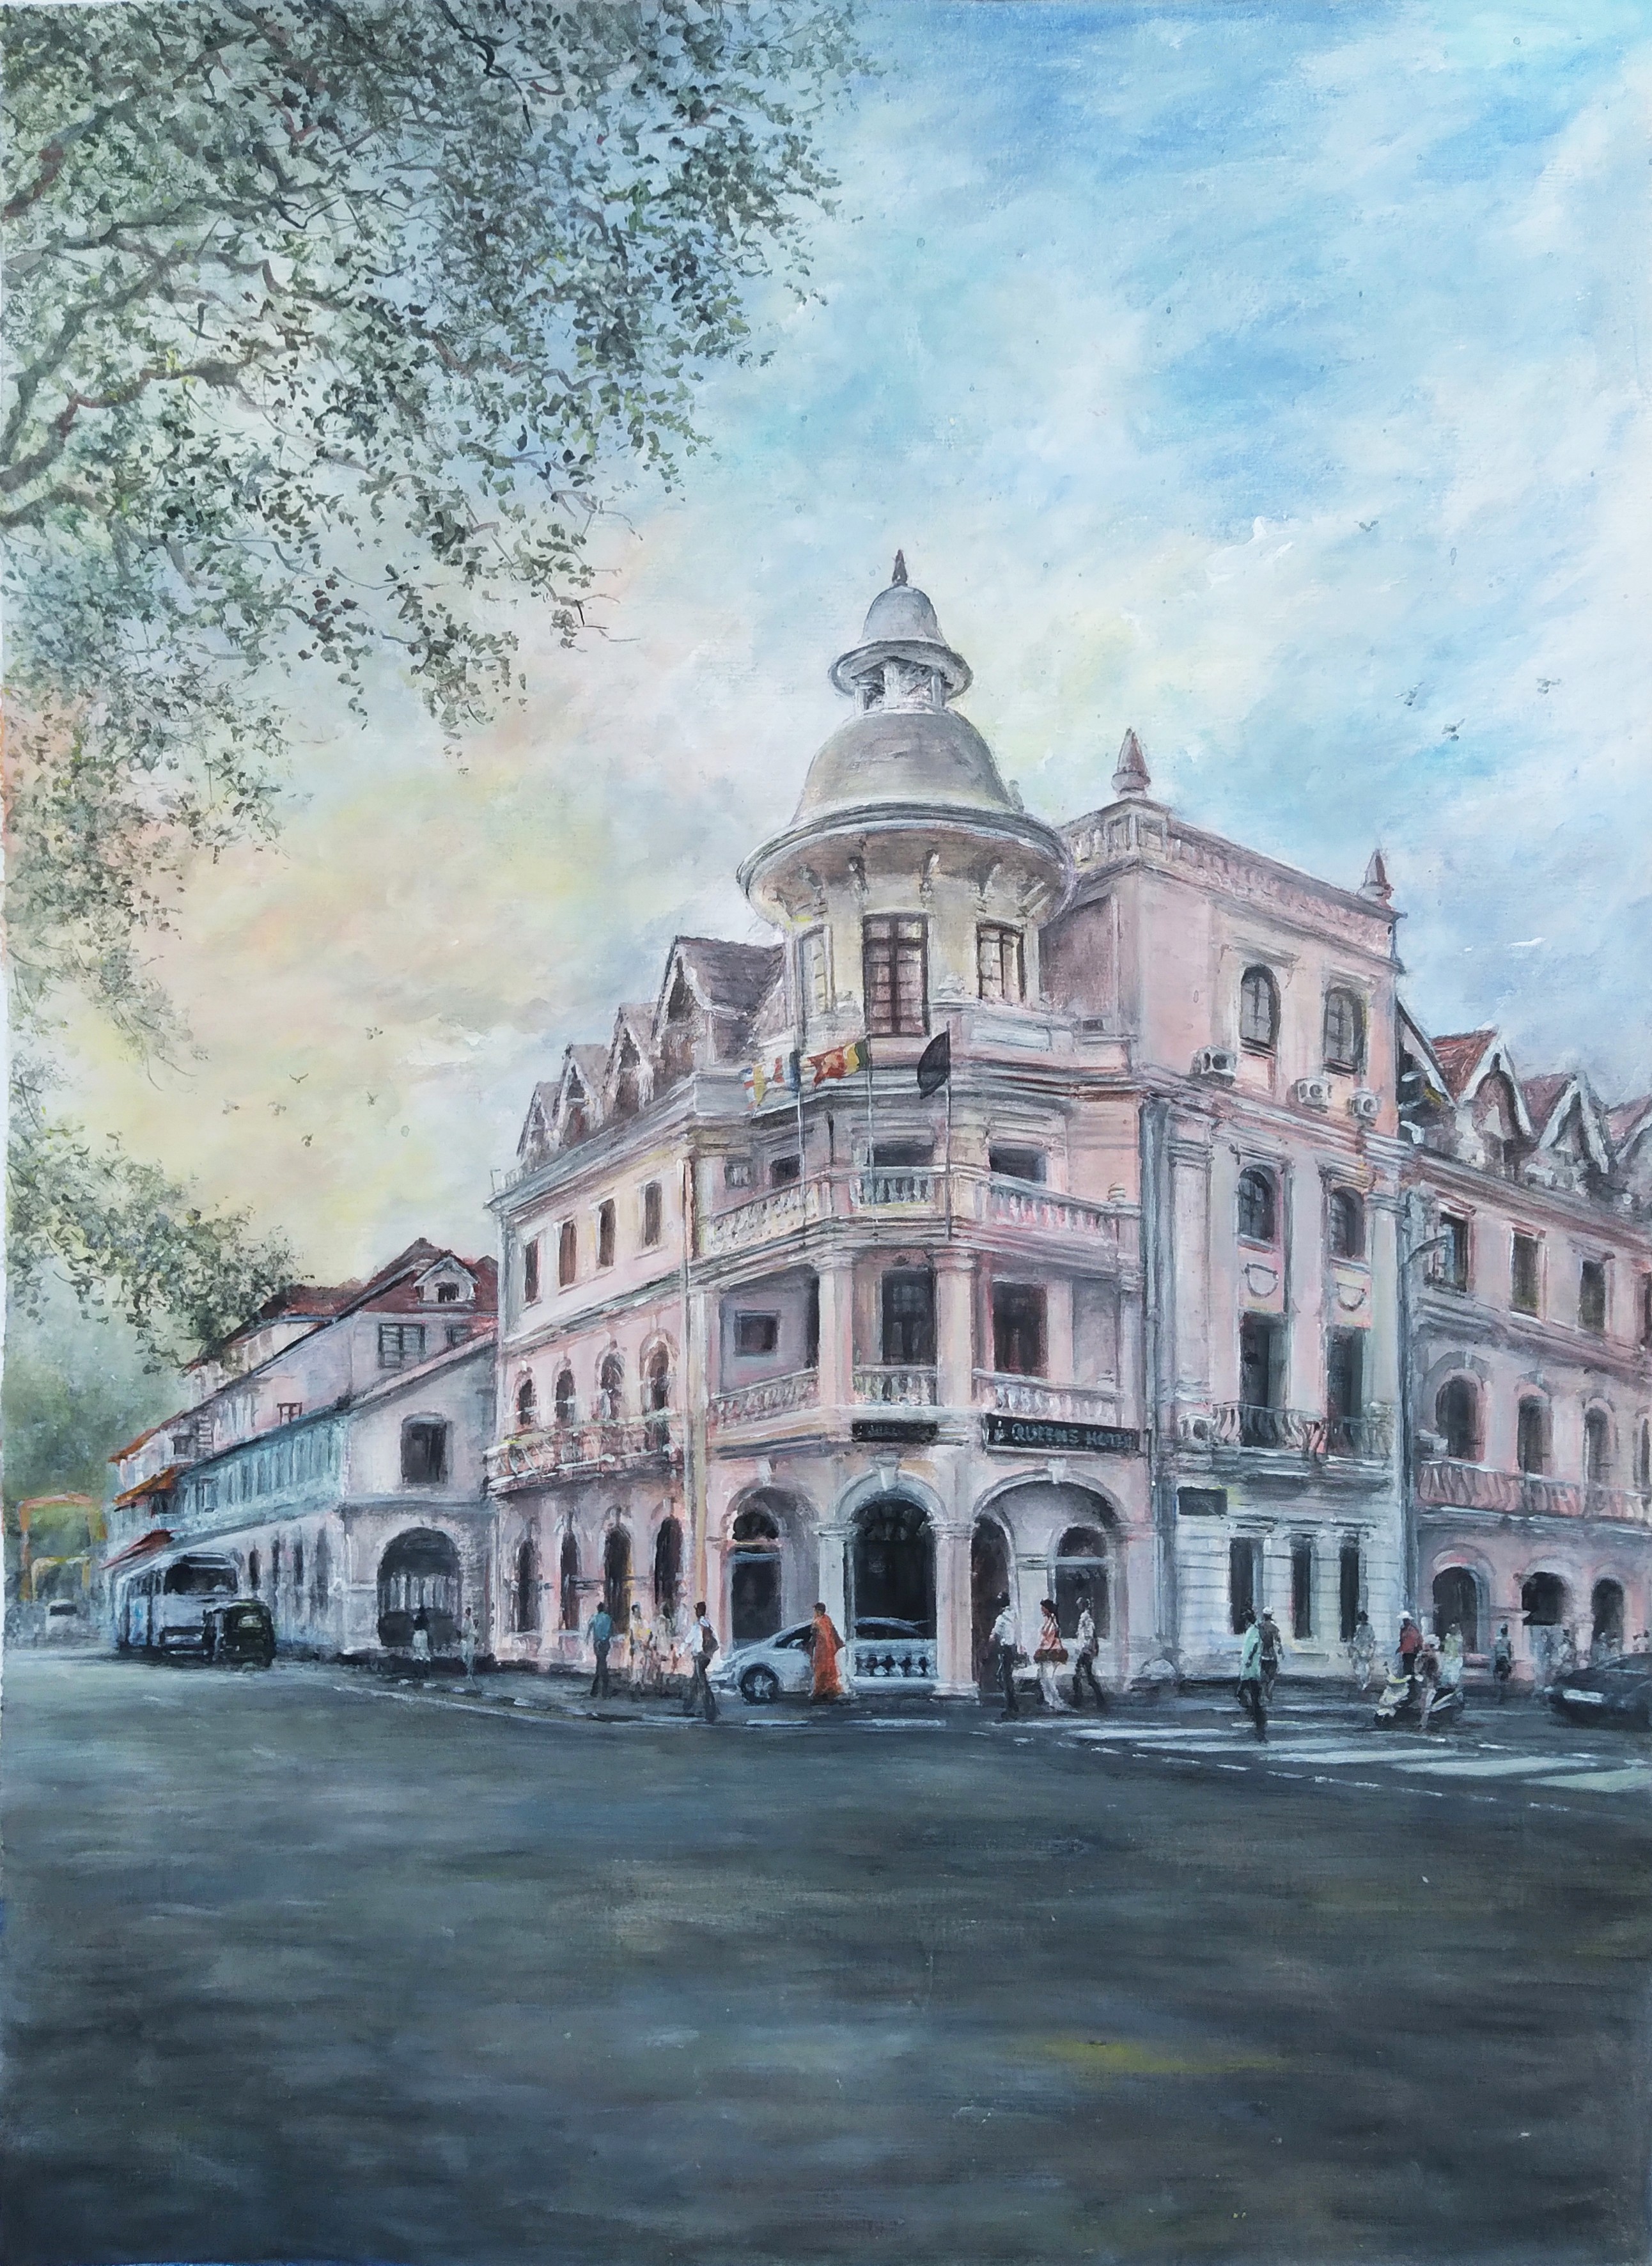 Queens Hotel Kandy by RUWAN MAHINDAPALA